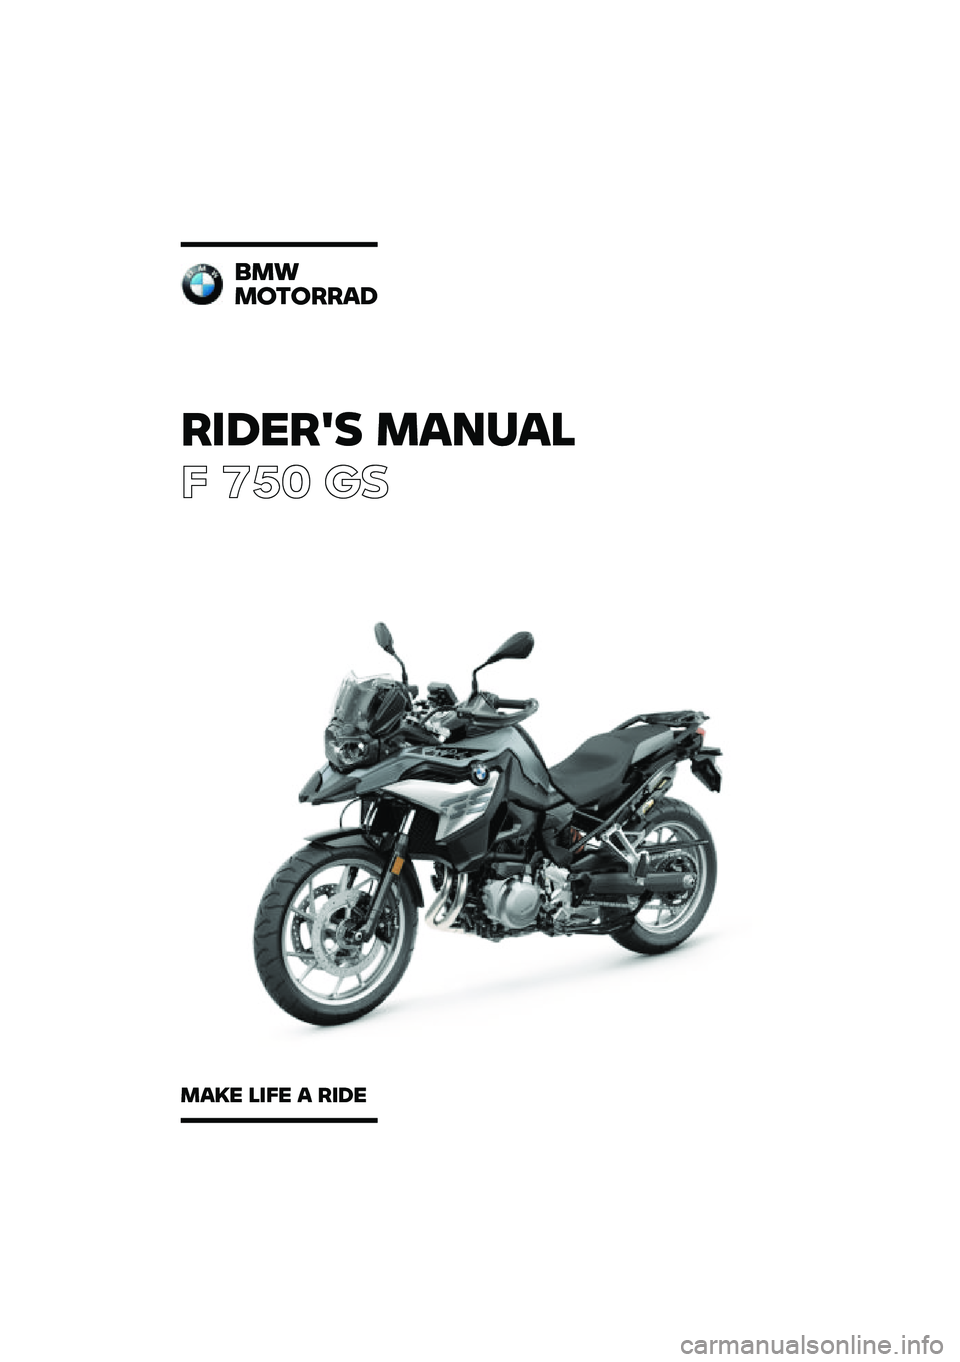 BMW MOTORRAD F 750 GS 2020  Riders Manual (in English) ������� �\b�	�
��	�\f
� ��� �\b�	
�
�\b�
�\b������	�
�\b�	�� �\f��� �	 ���� 